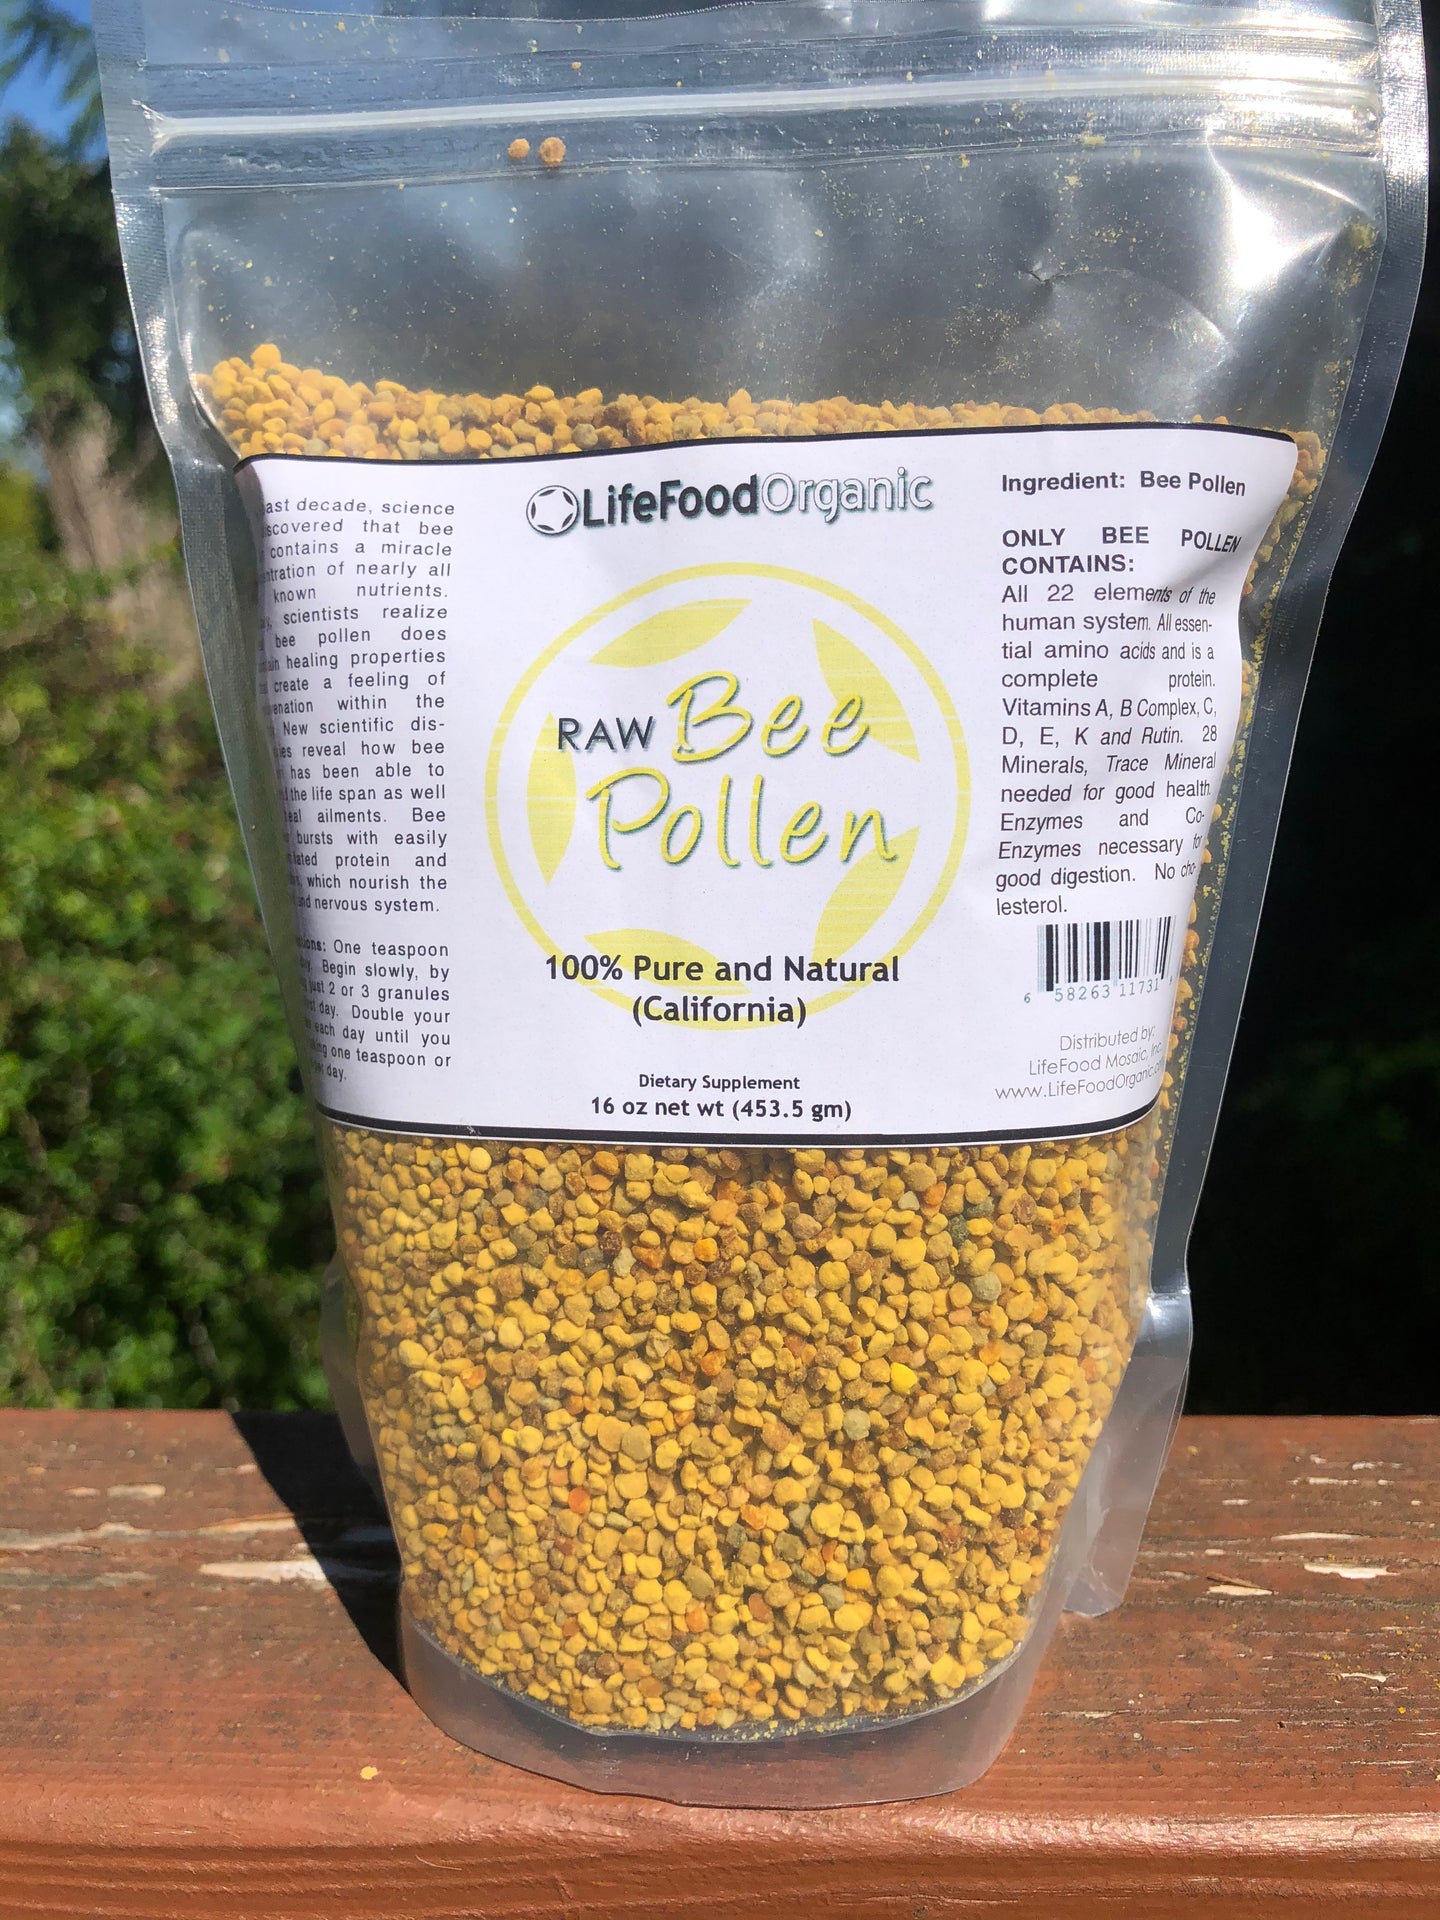 LifeFood Fresh Raw Bee Pollen, 1 pound